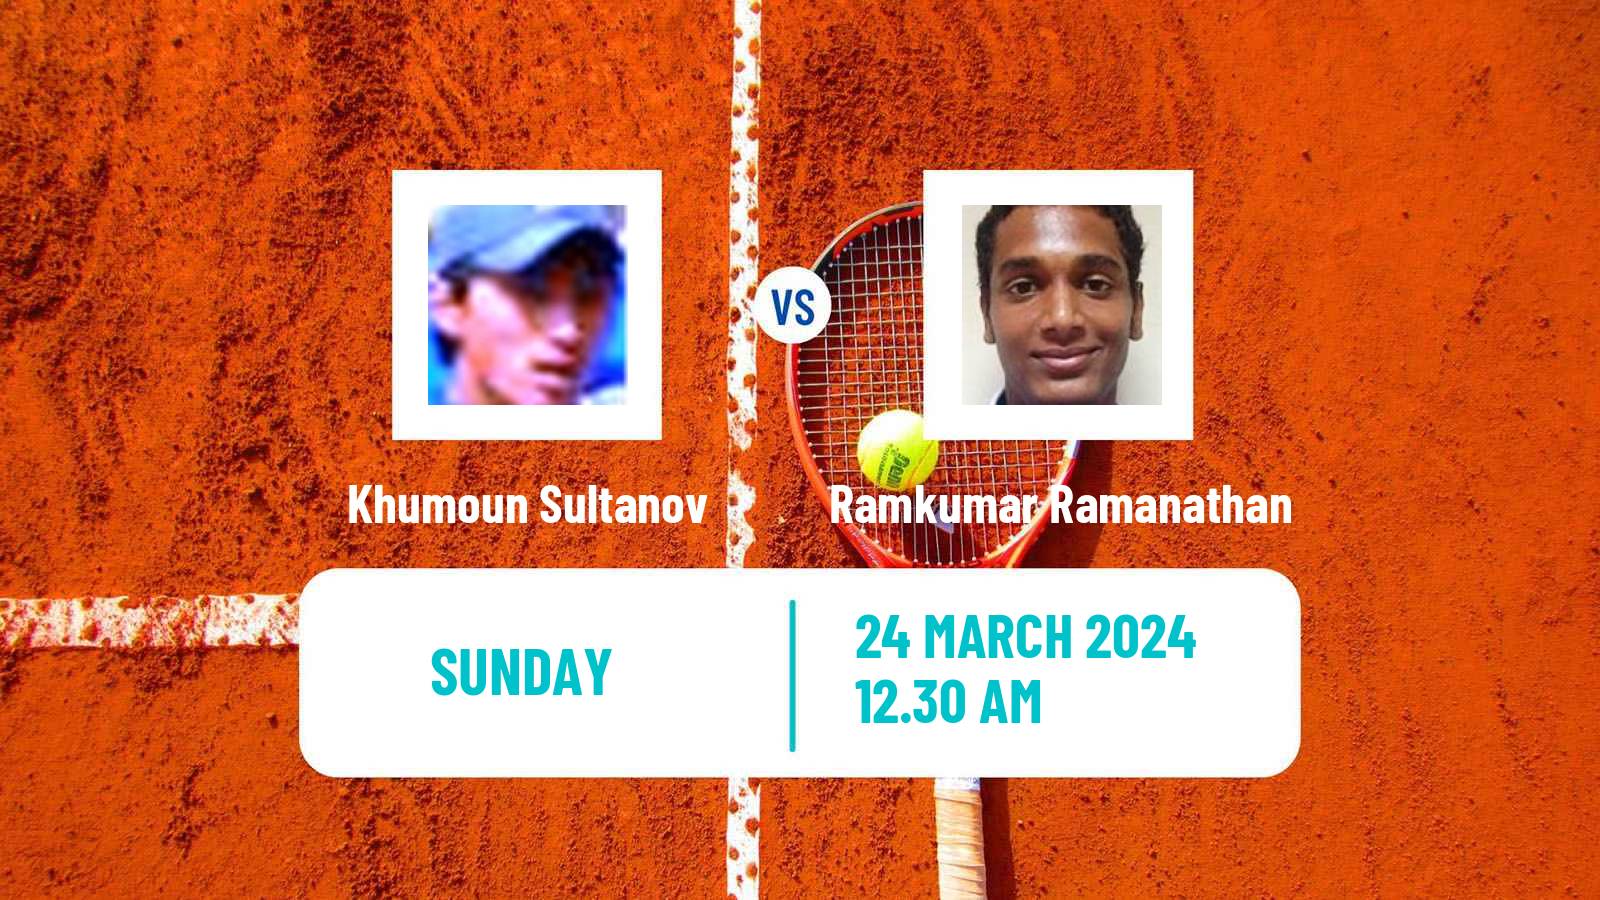 Tennis ITF M15 Chandigarh Men Khumoun Sultanov - Ramkumar Ramanathan